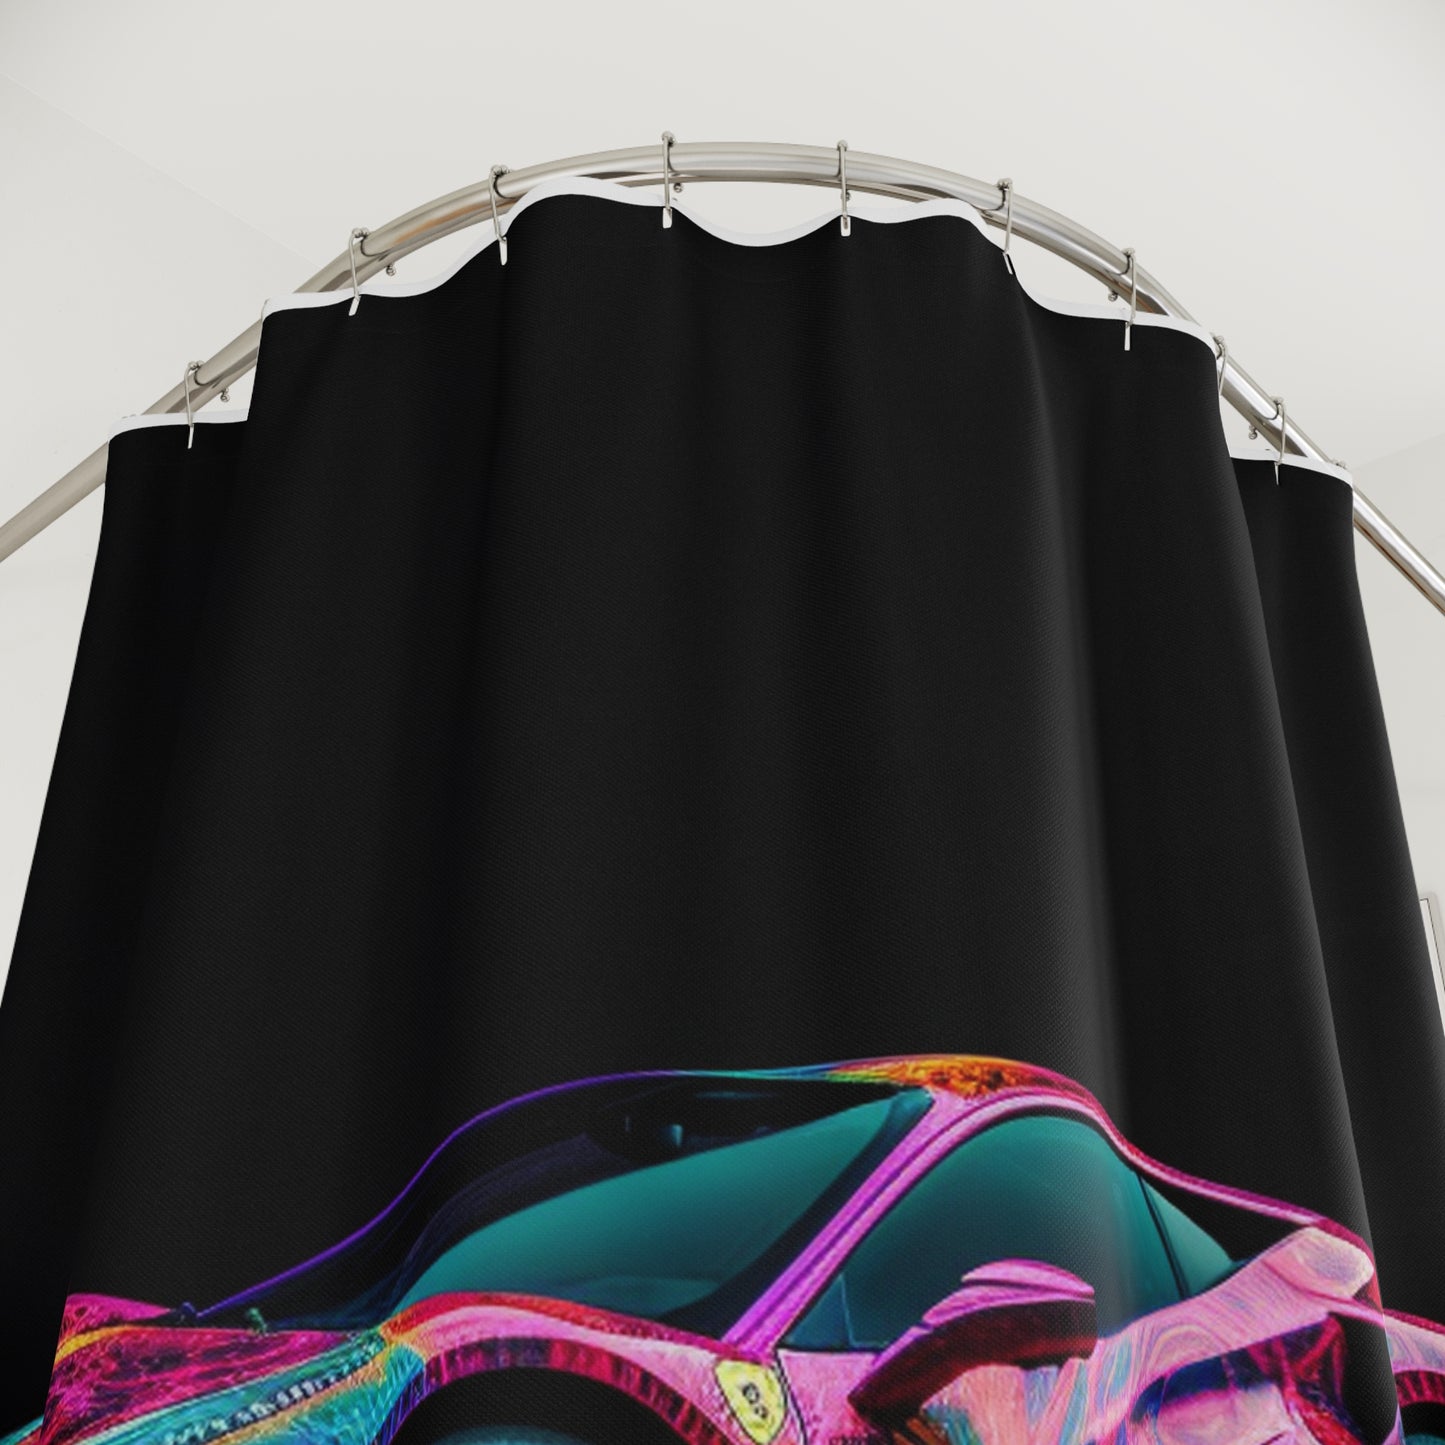 Polyester Shower Curtain Ferrari Color 4